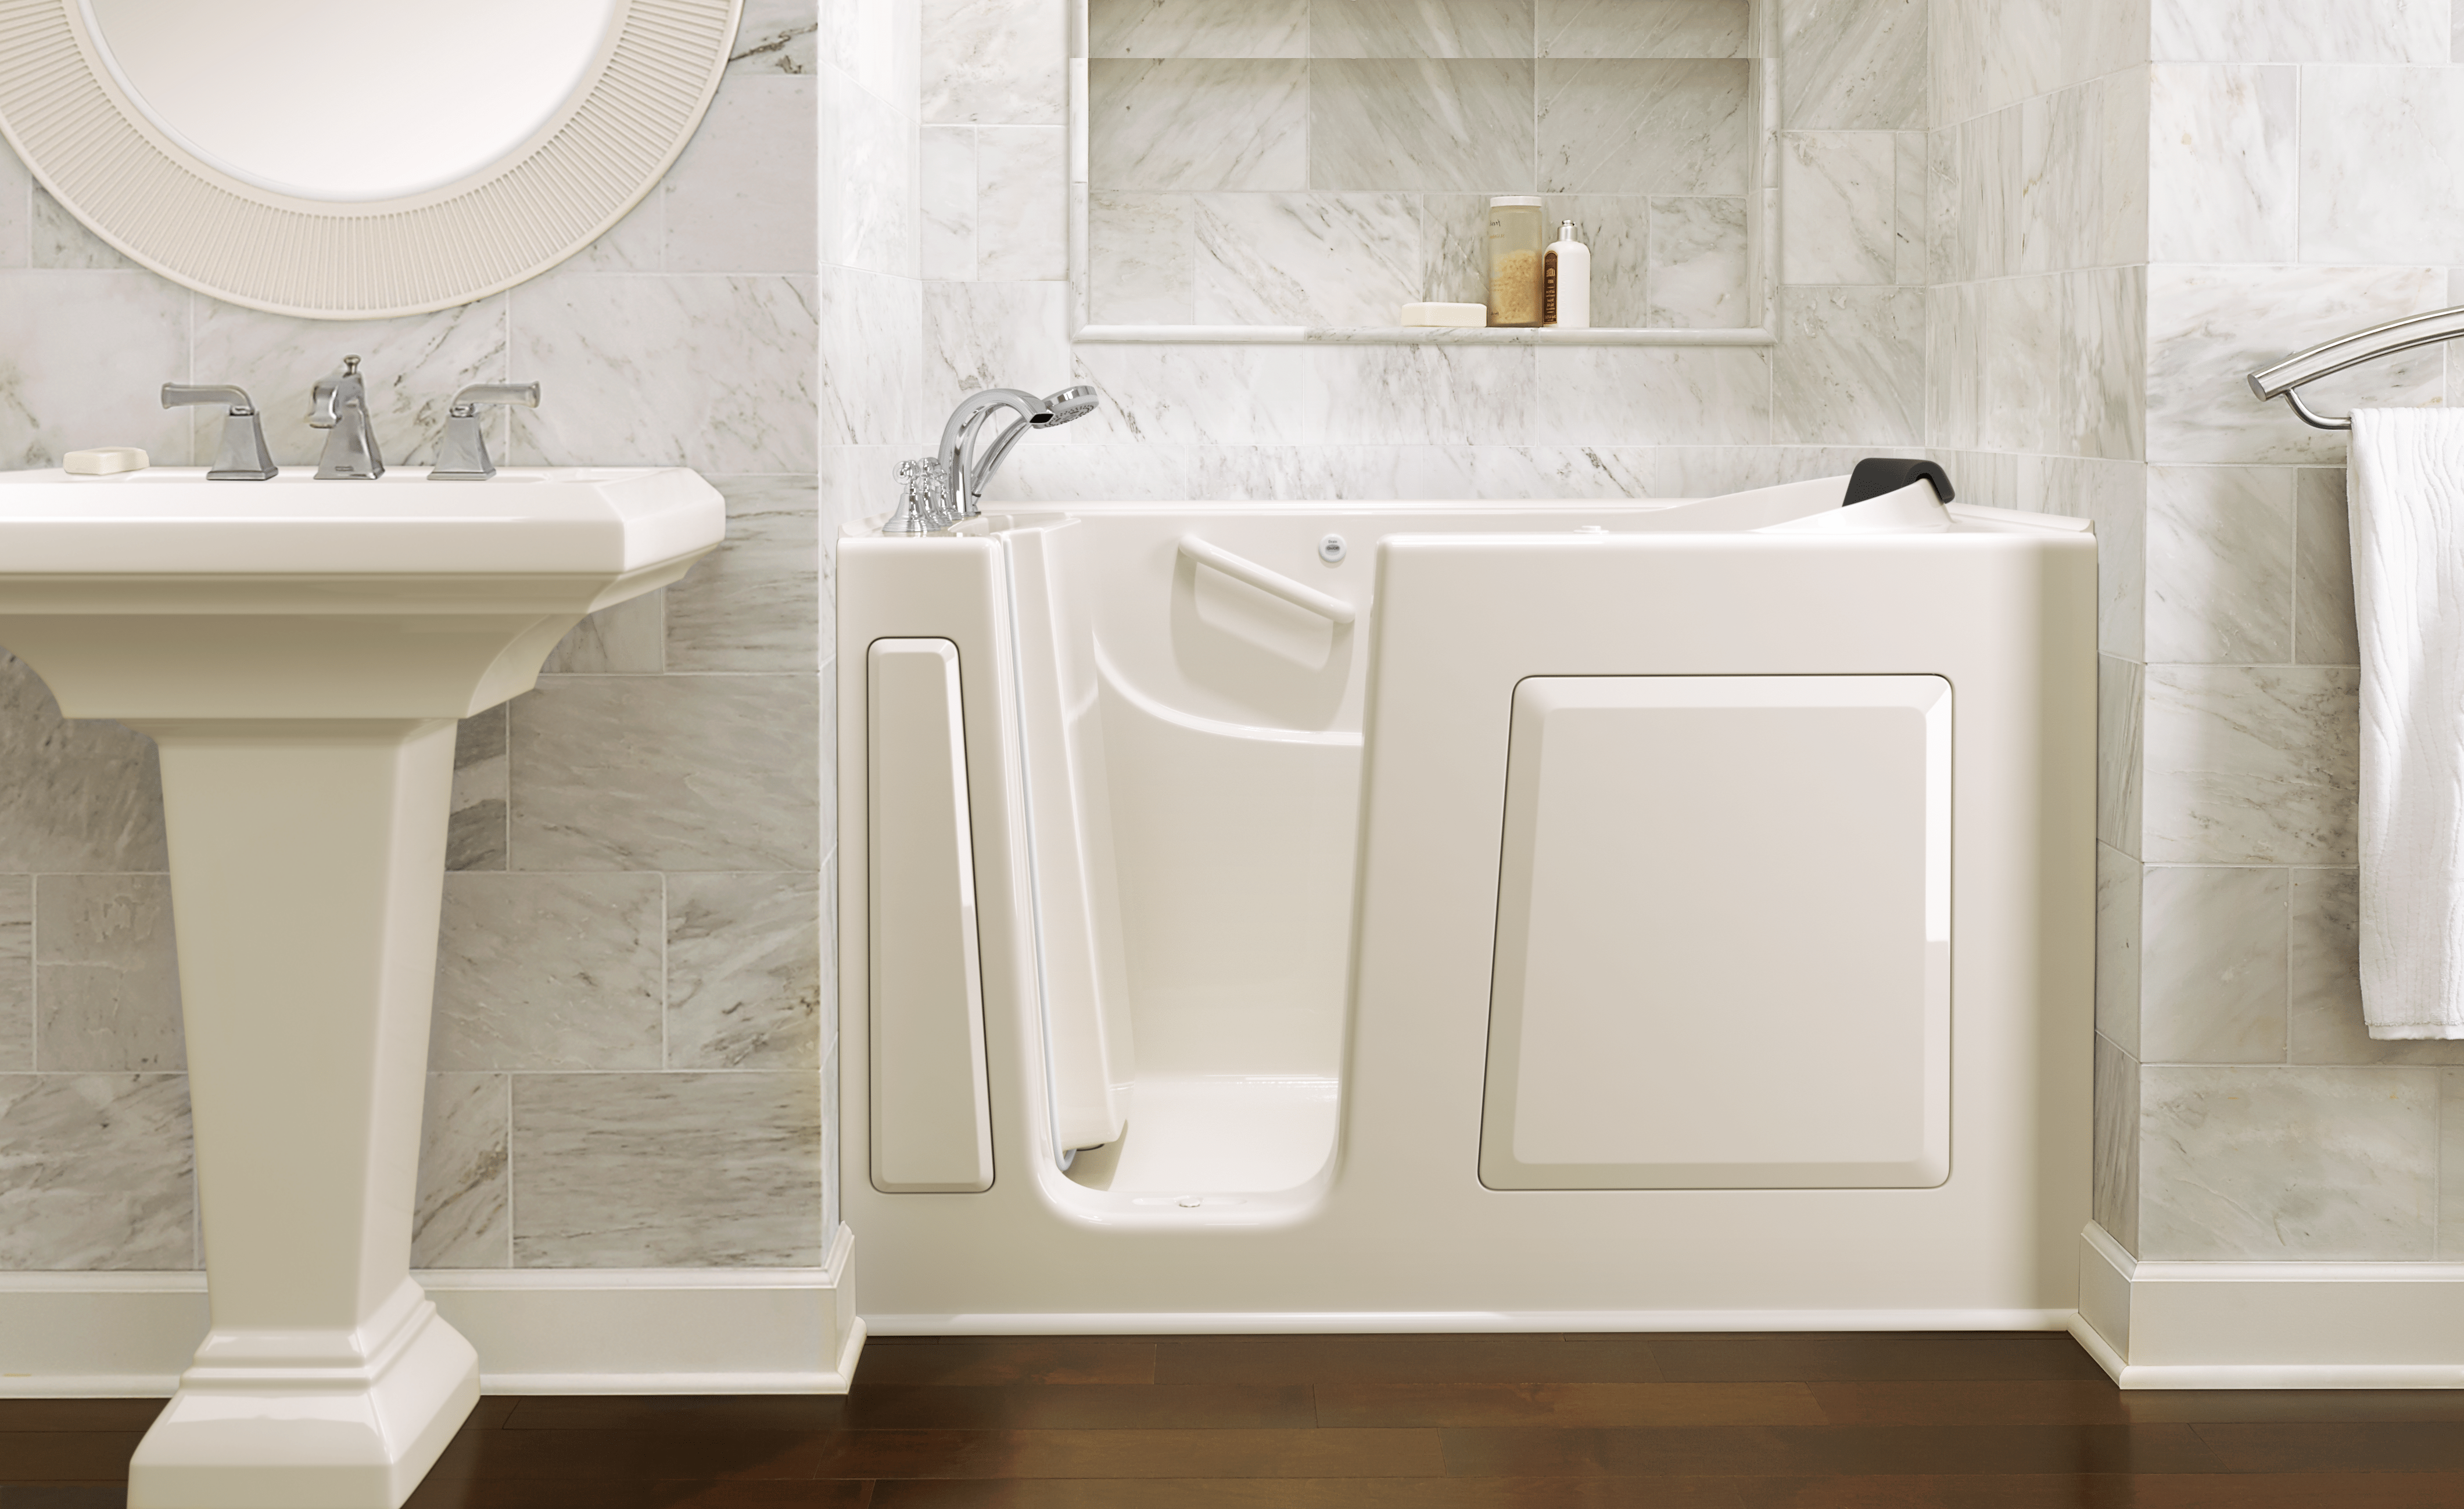 Gelcoat Premium Series 60x30 Inch Walk-In Bathtub with Air Massage System - Left Hand Door and Drain